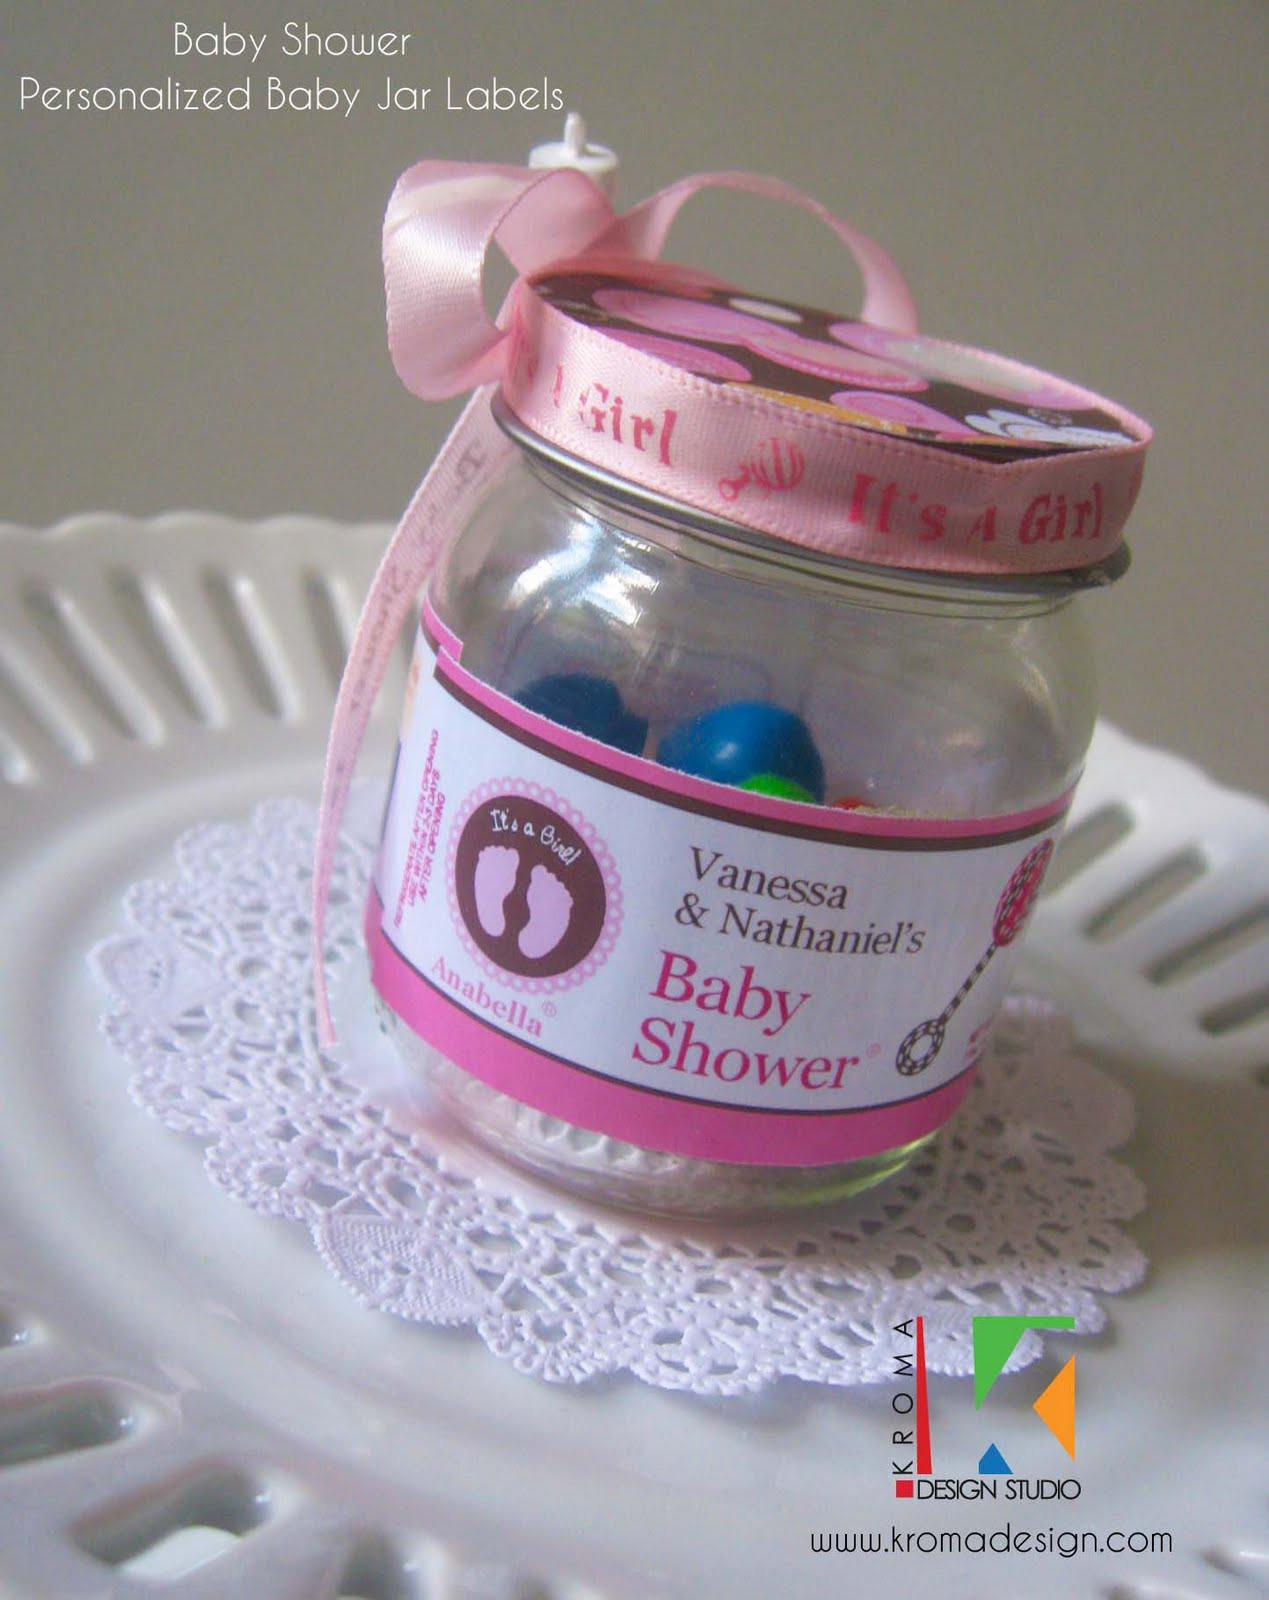 Diy Baby Shower Favors For Girl
 Baby Showers DIY Printable Baby Jar Label Favors for